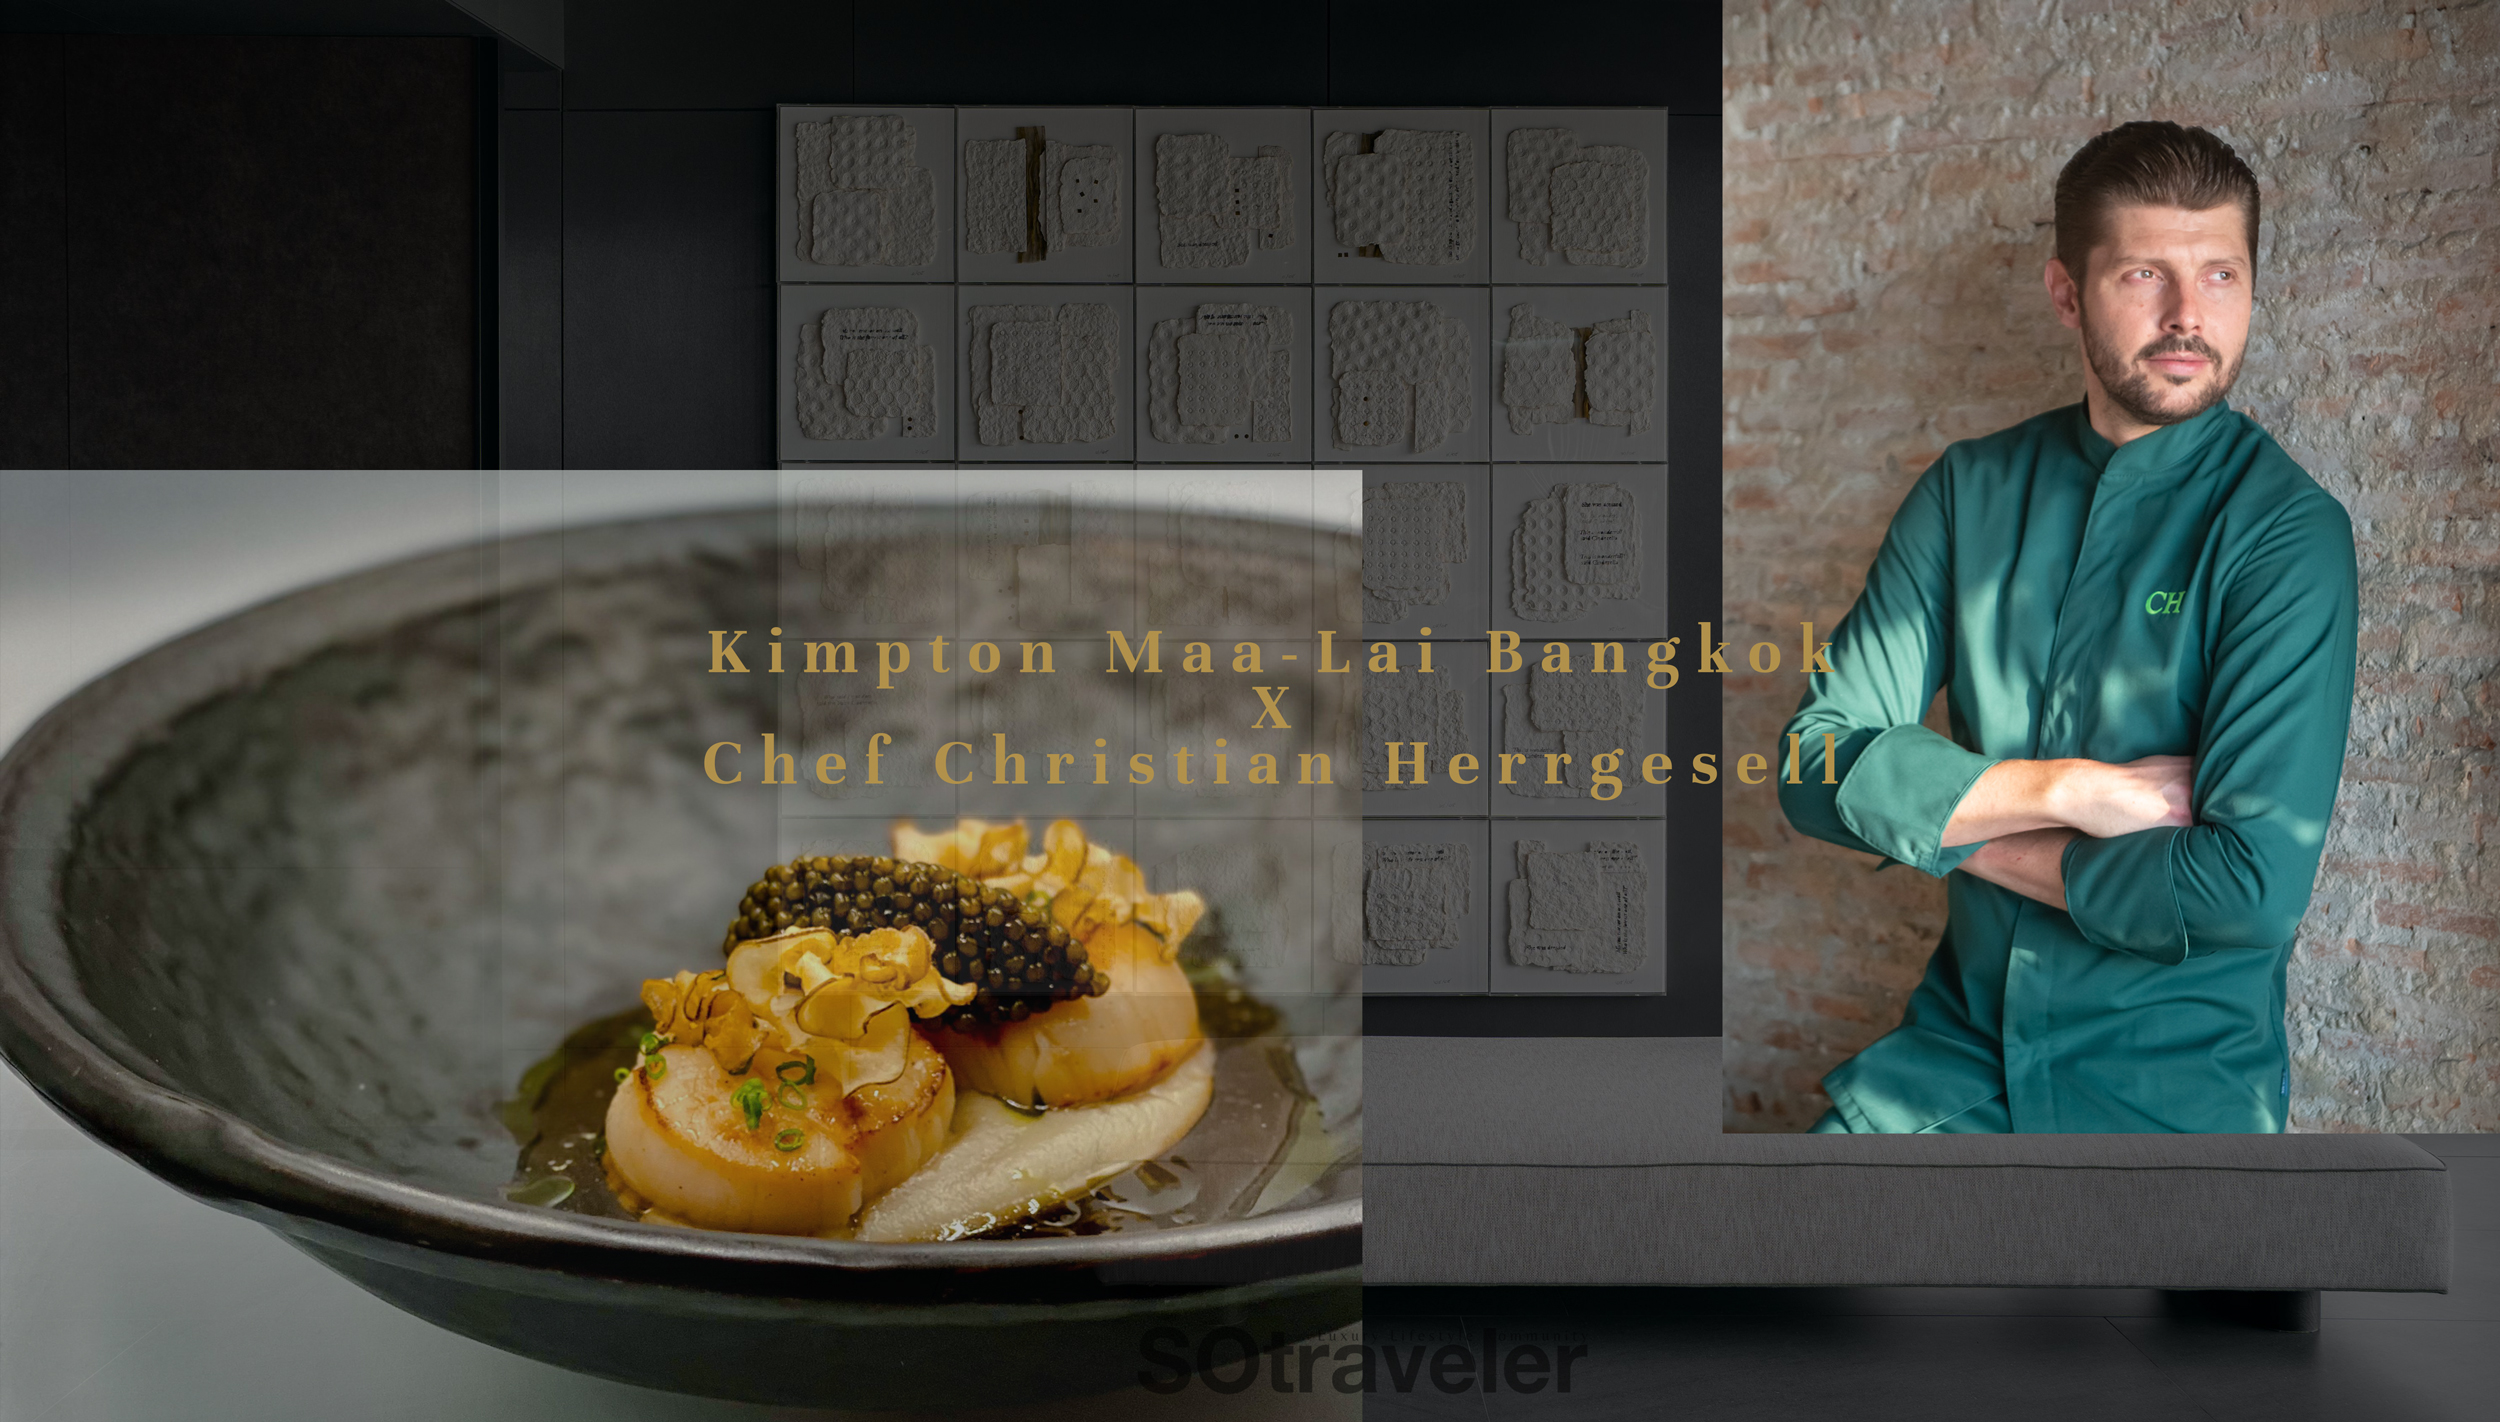 Kimpton Maa-Lai Bangkok X Chef Christian Herrgesell